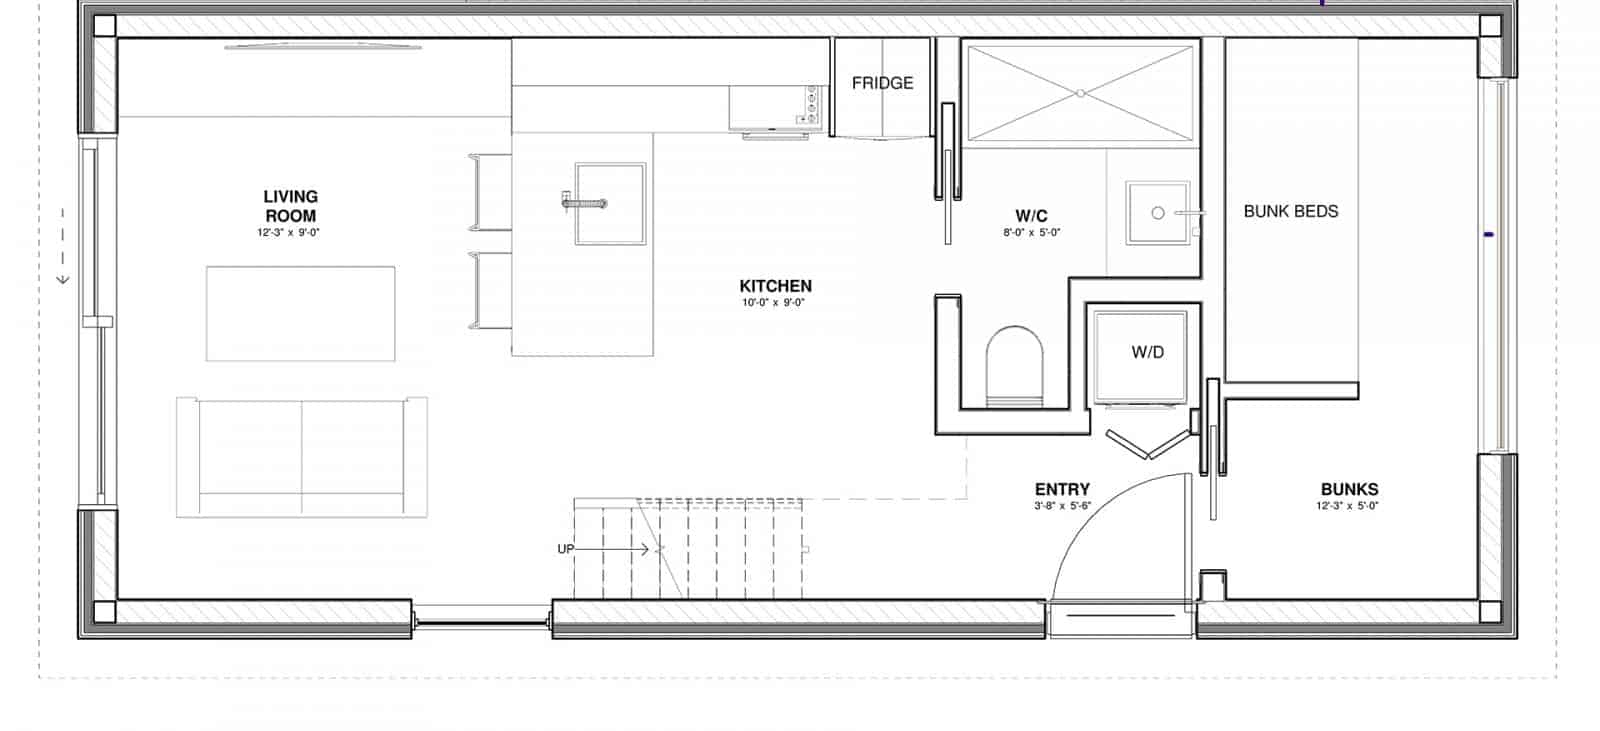 Toluca Mini Home small prefab home or ADU by Dvele floorplan main level.